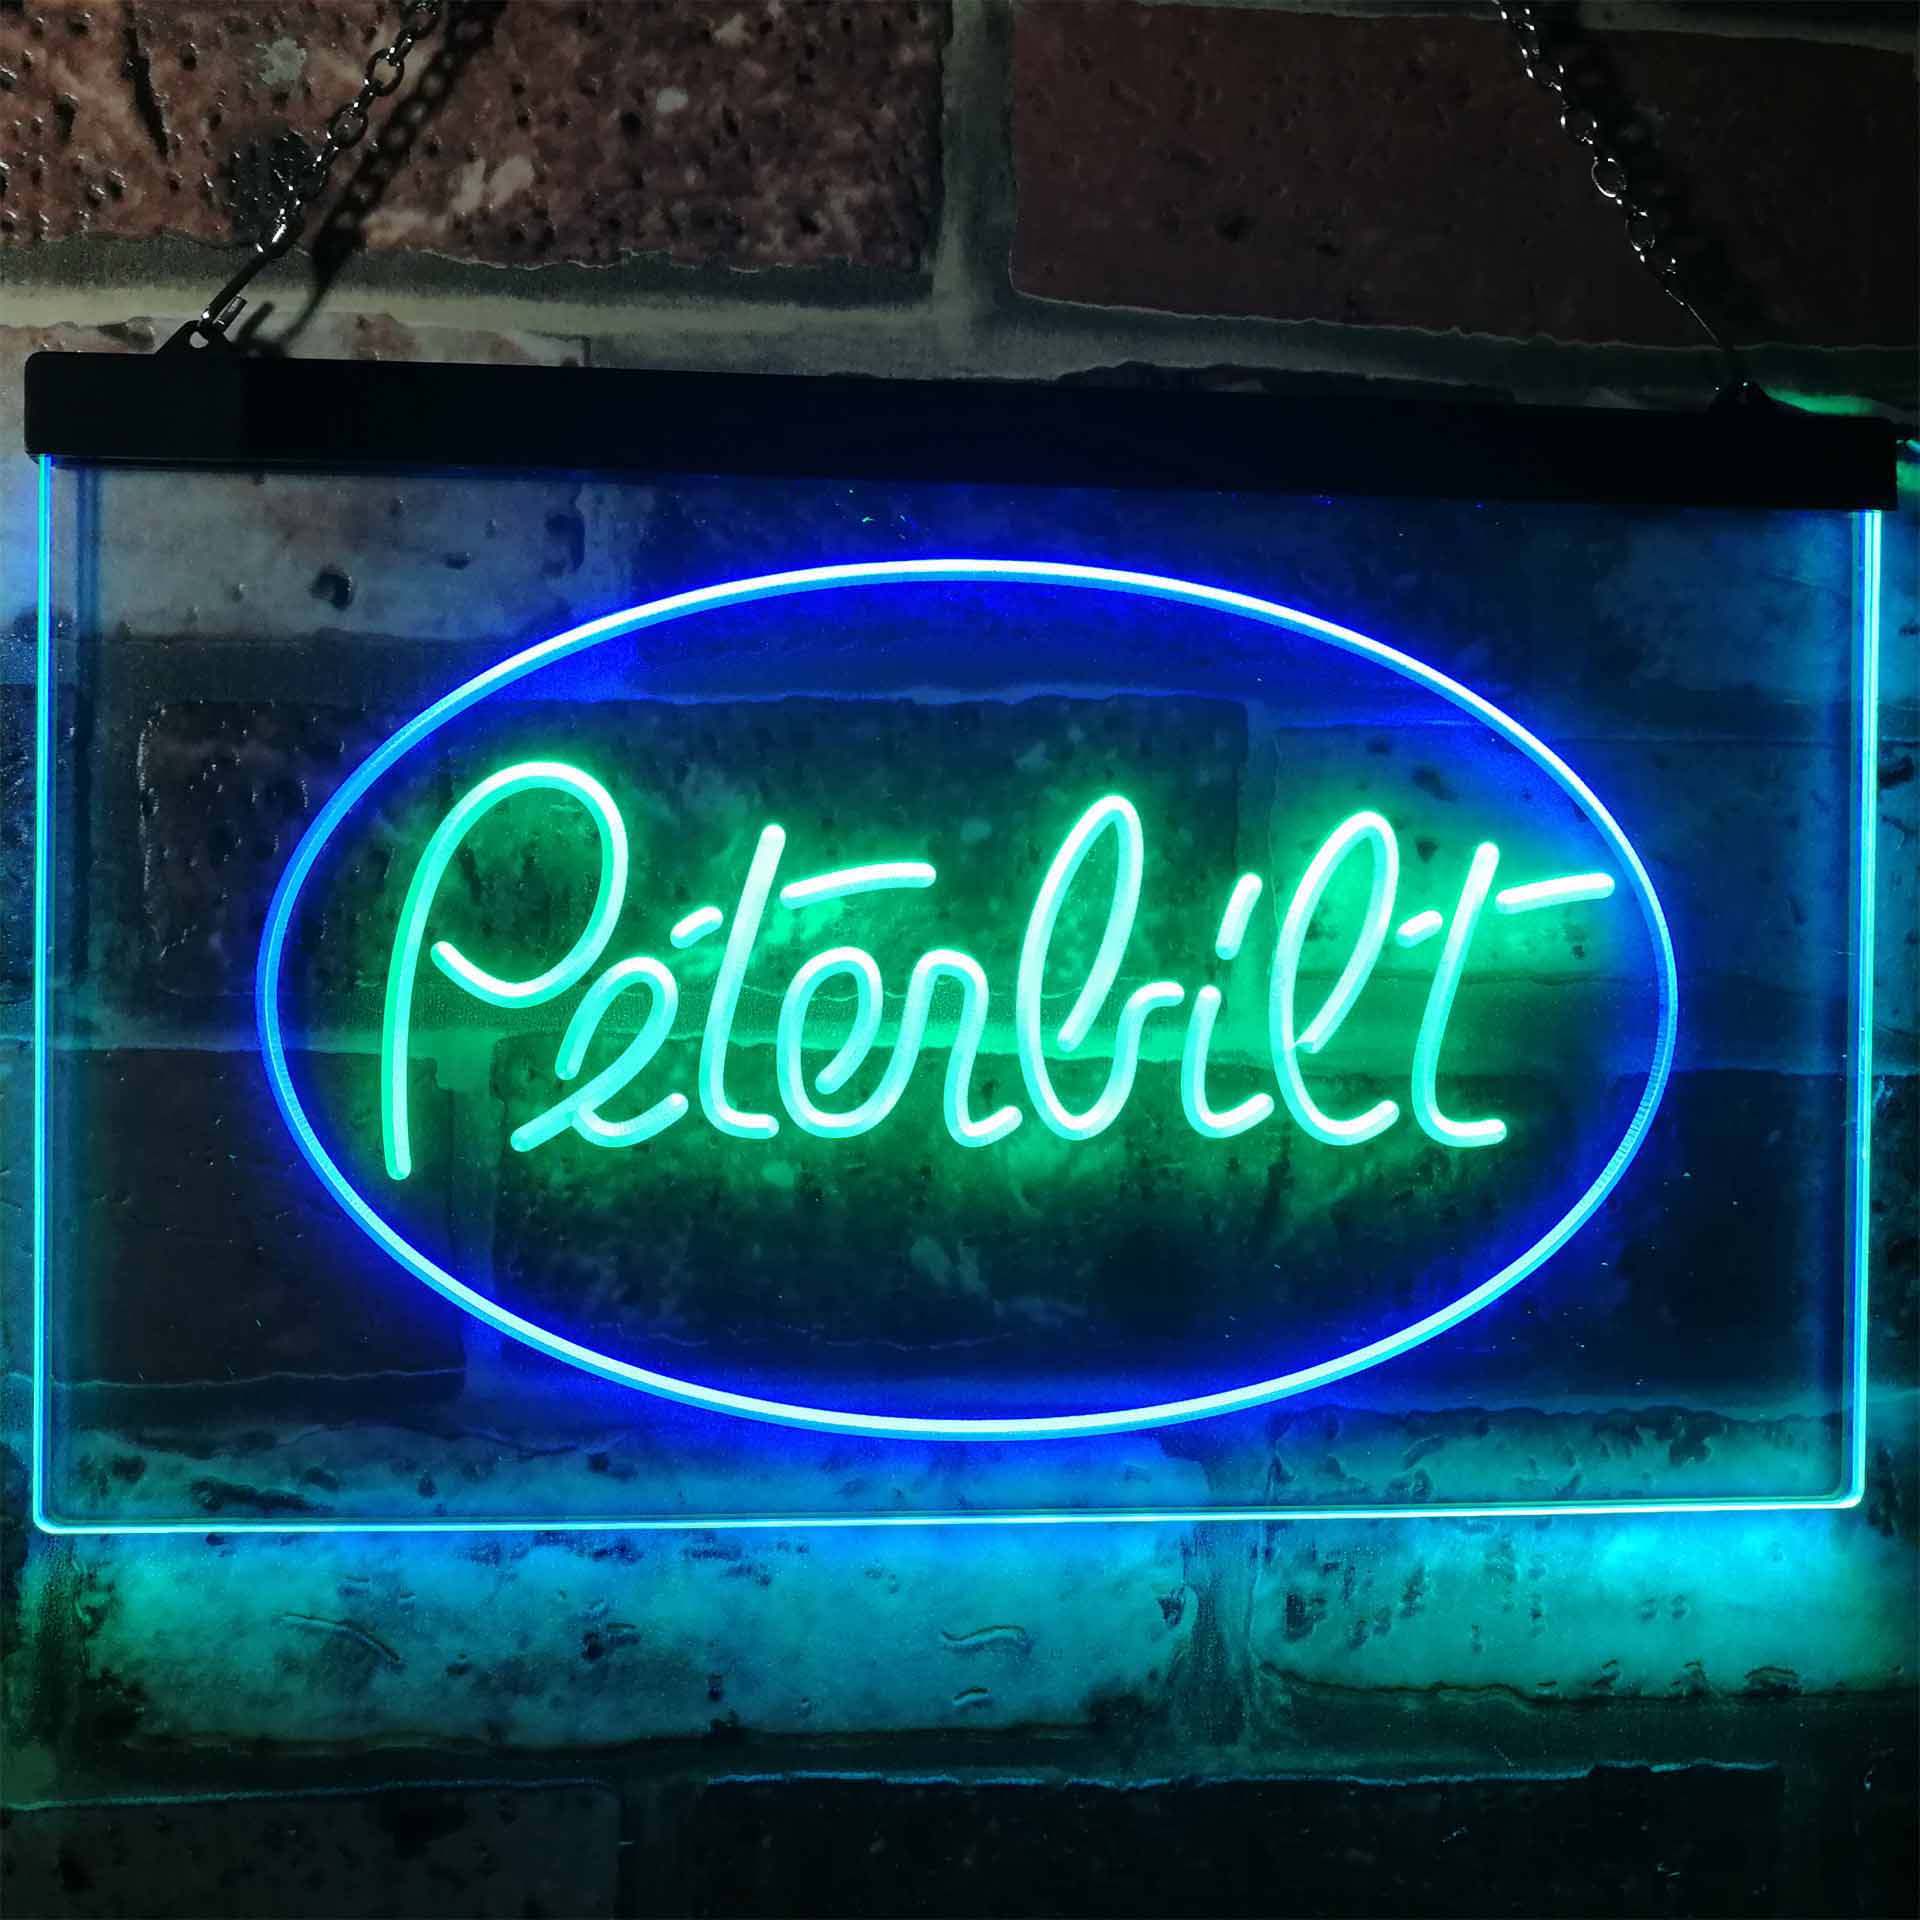 Peterbilt Car Transport Bar LED Neon Sign